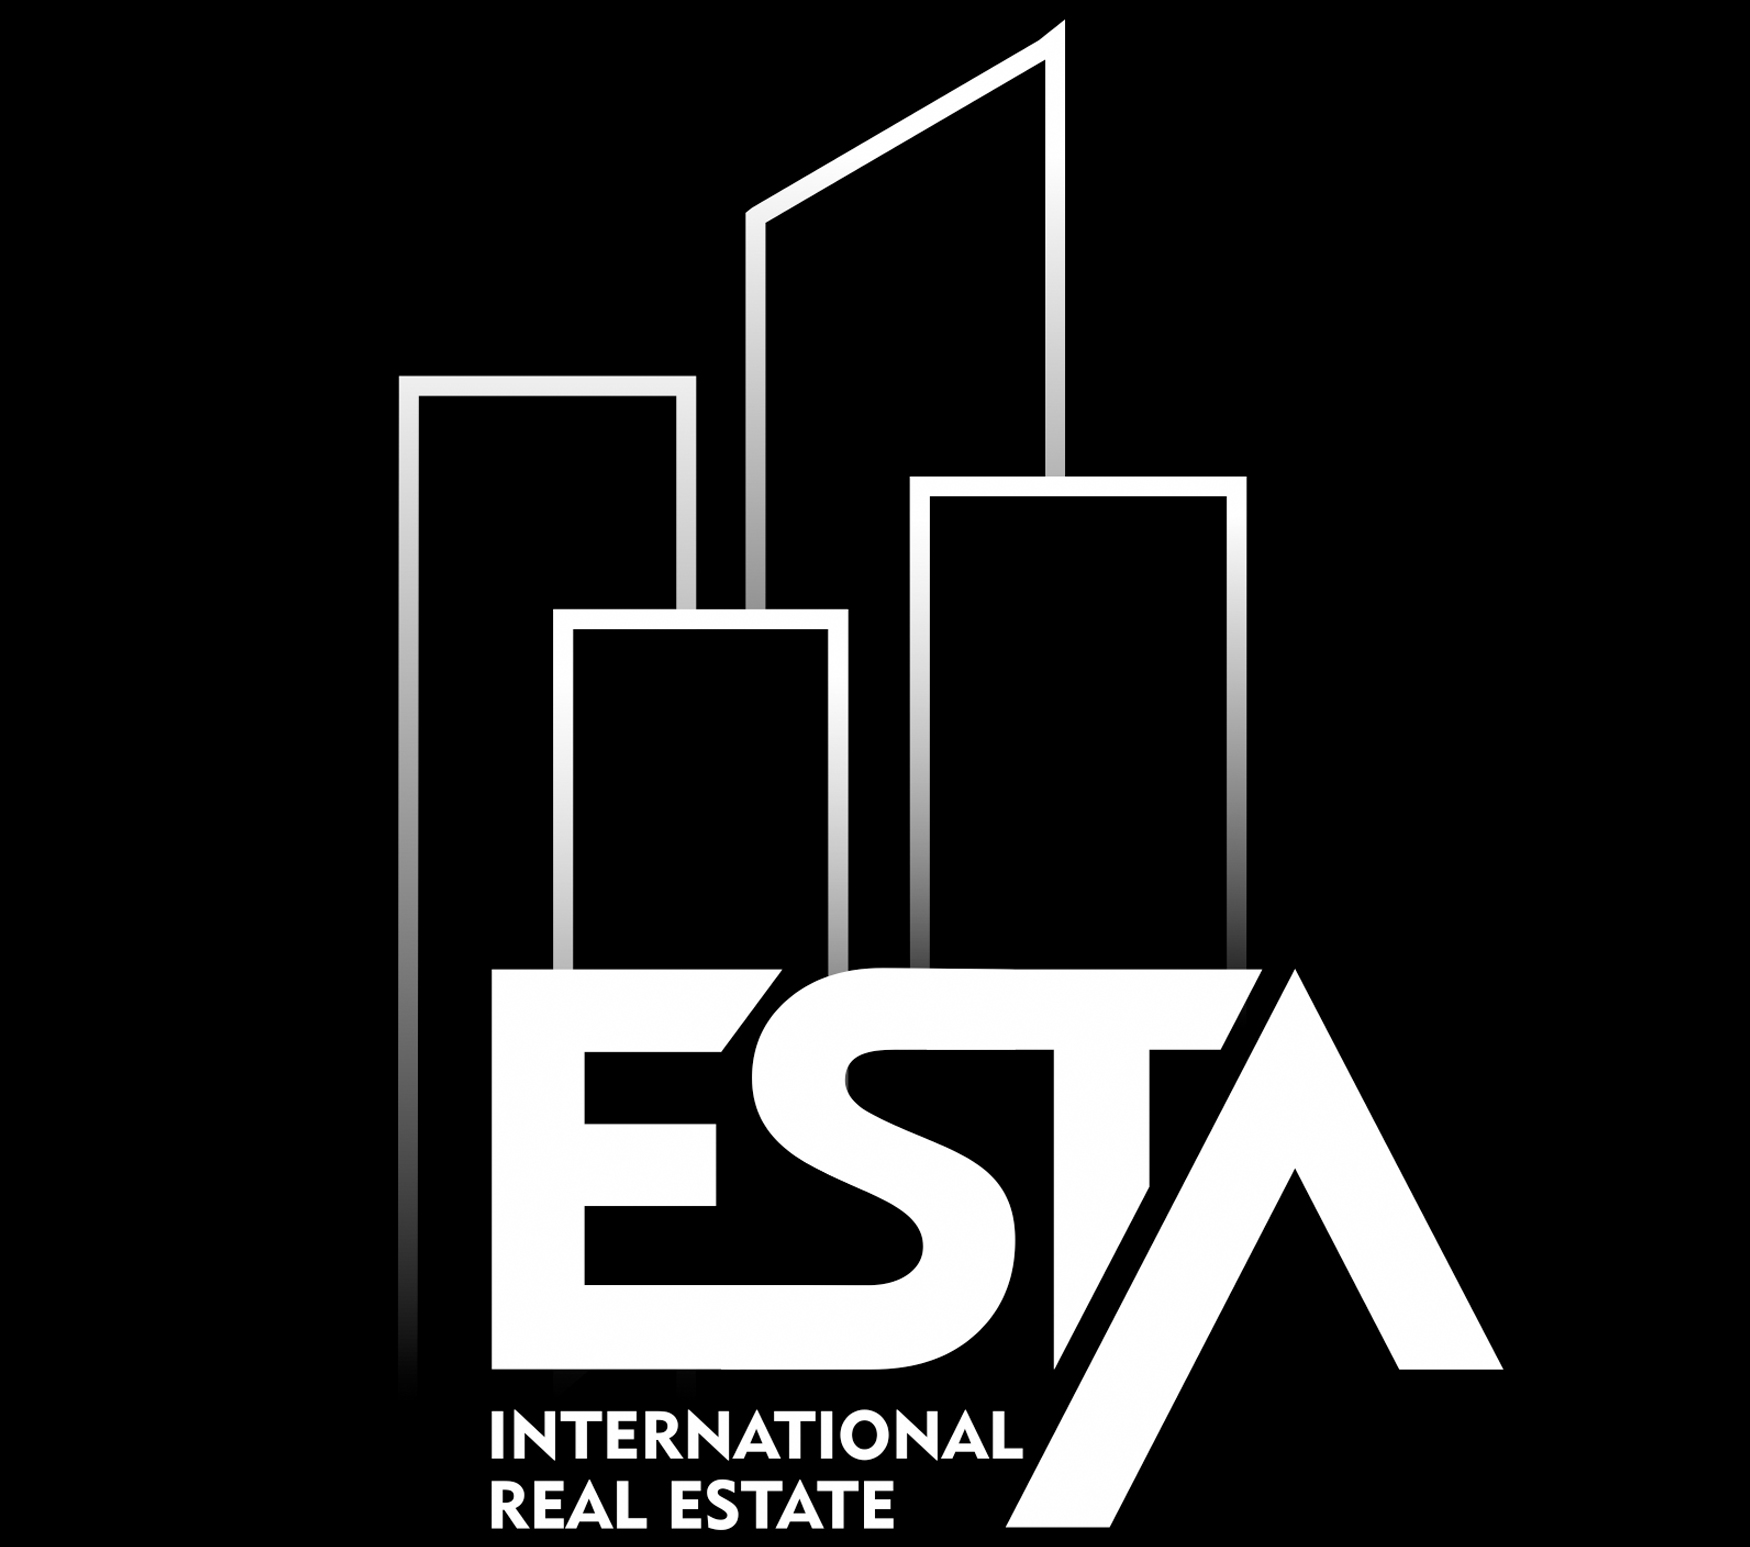 AD Agency Dubai client - ESTA